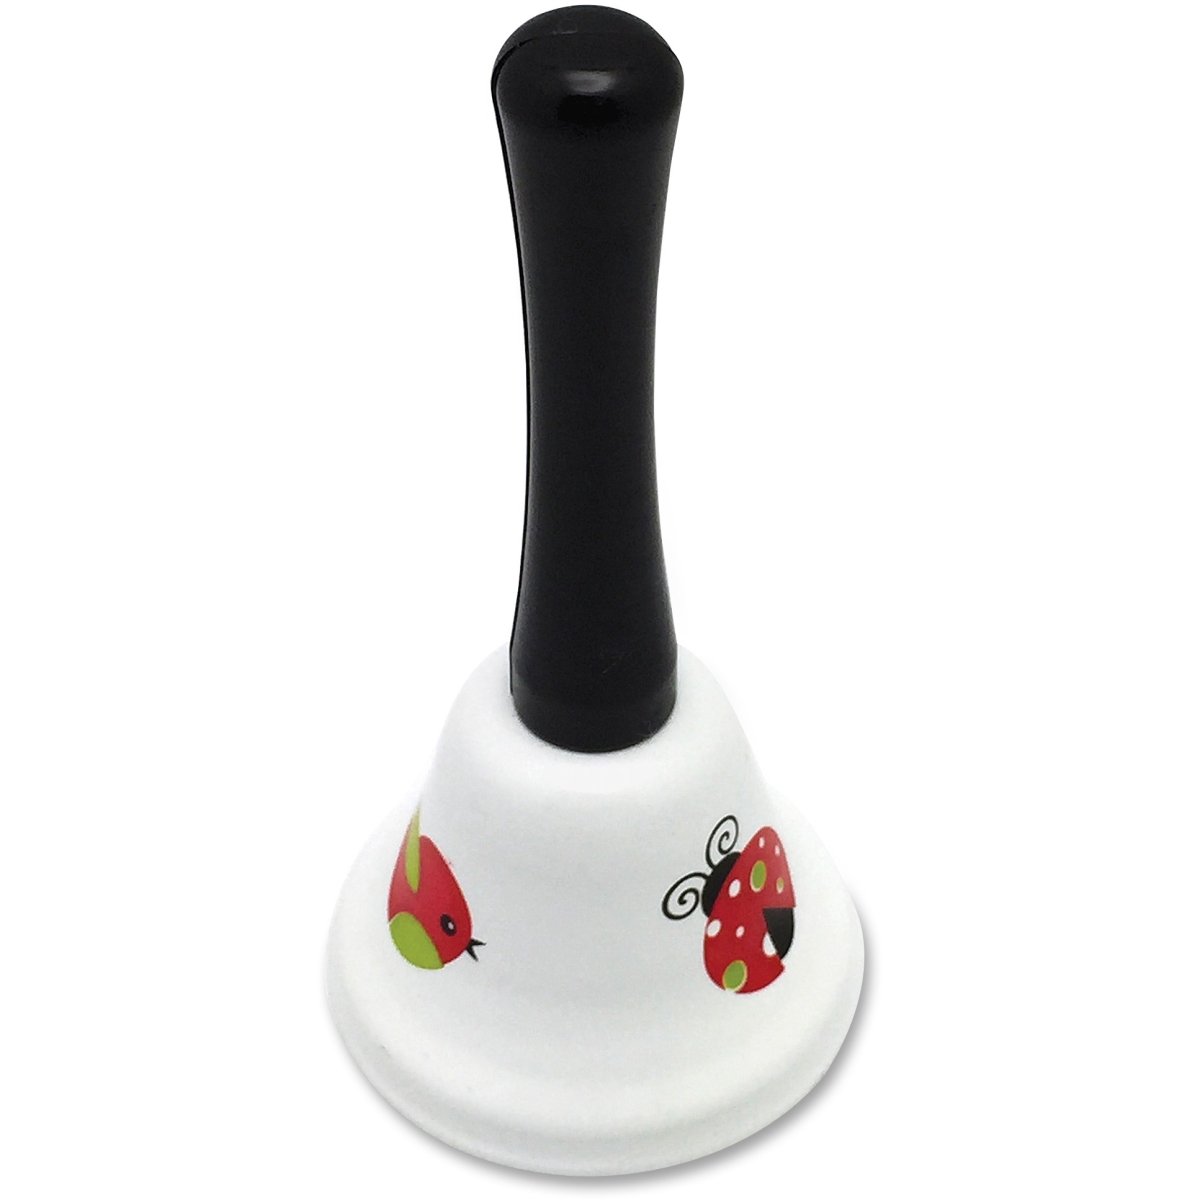 Ash10516 Ladybug Hand Bell - Multi Color